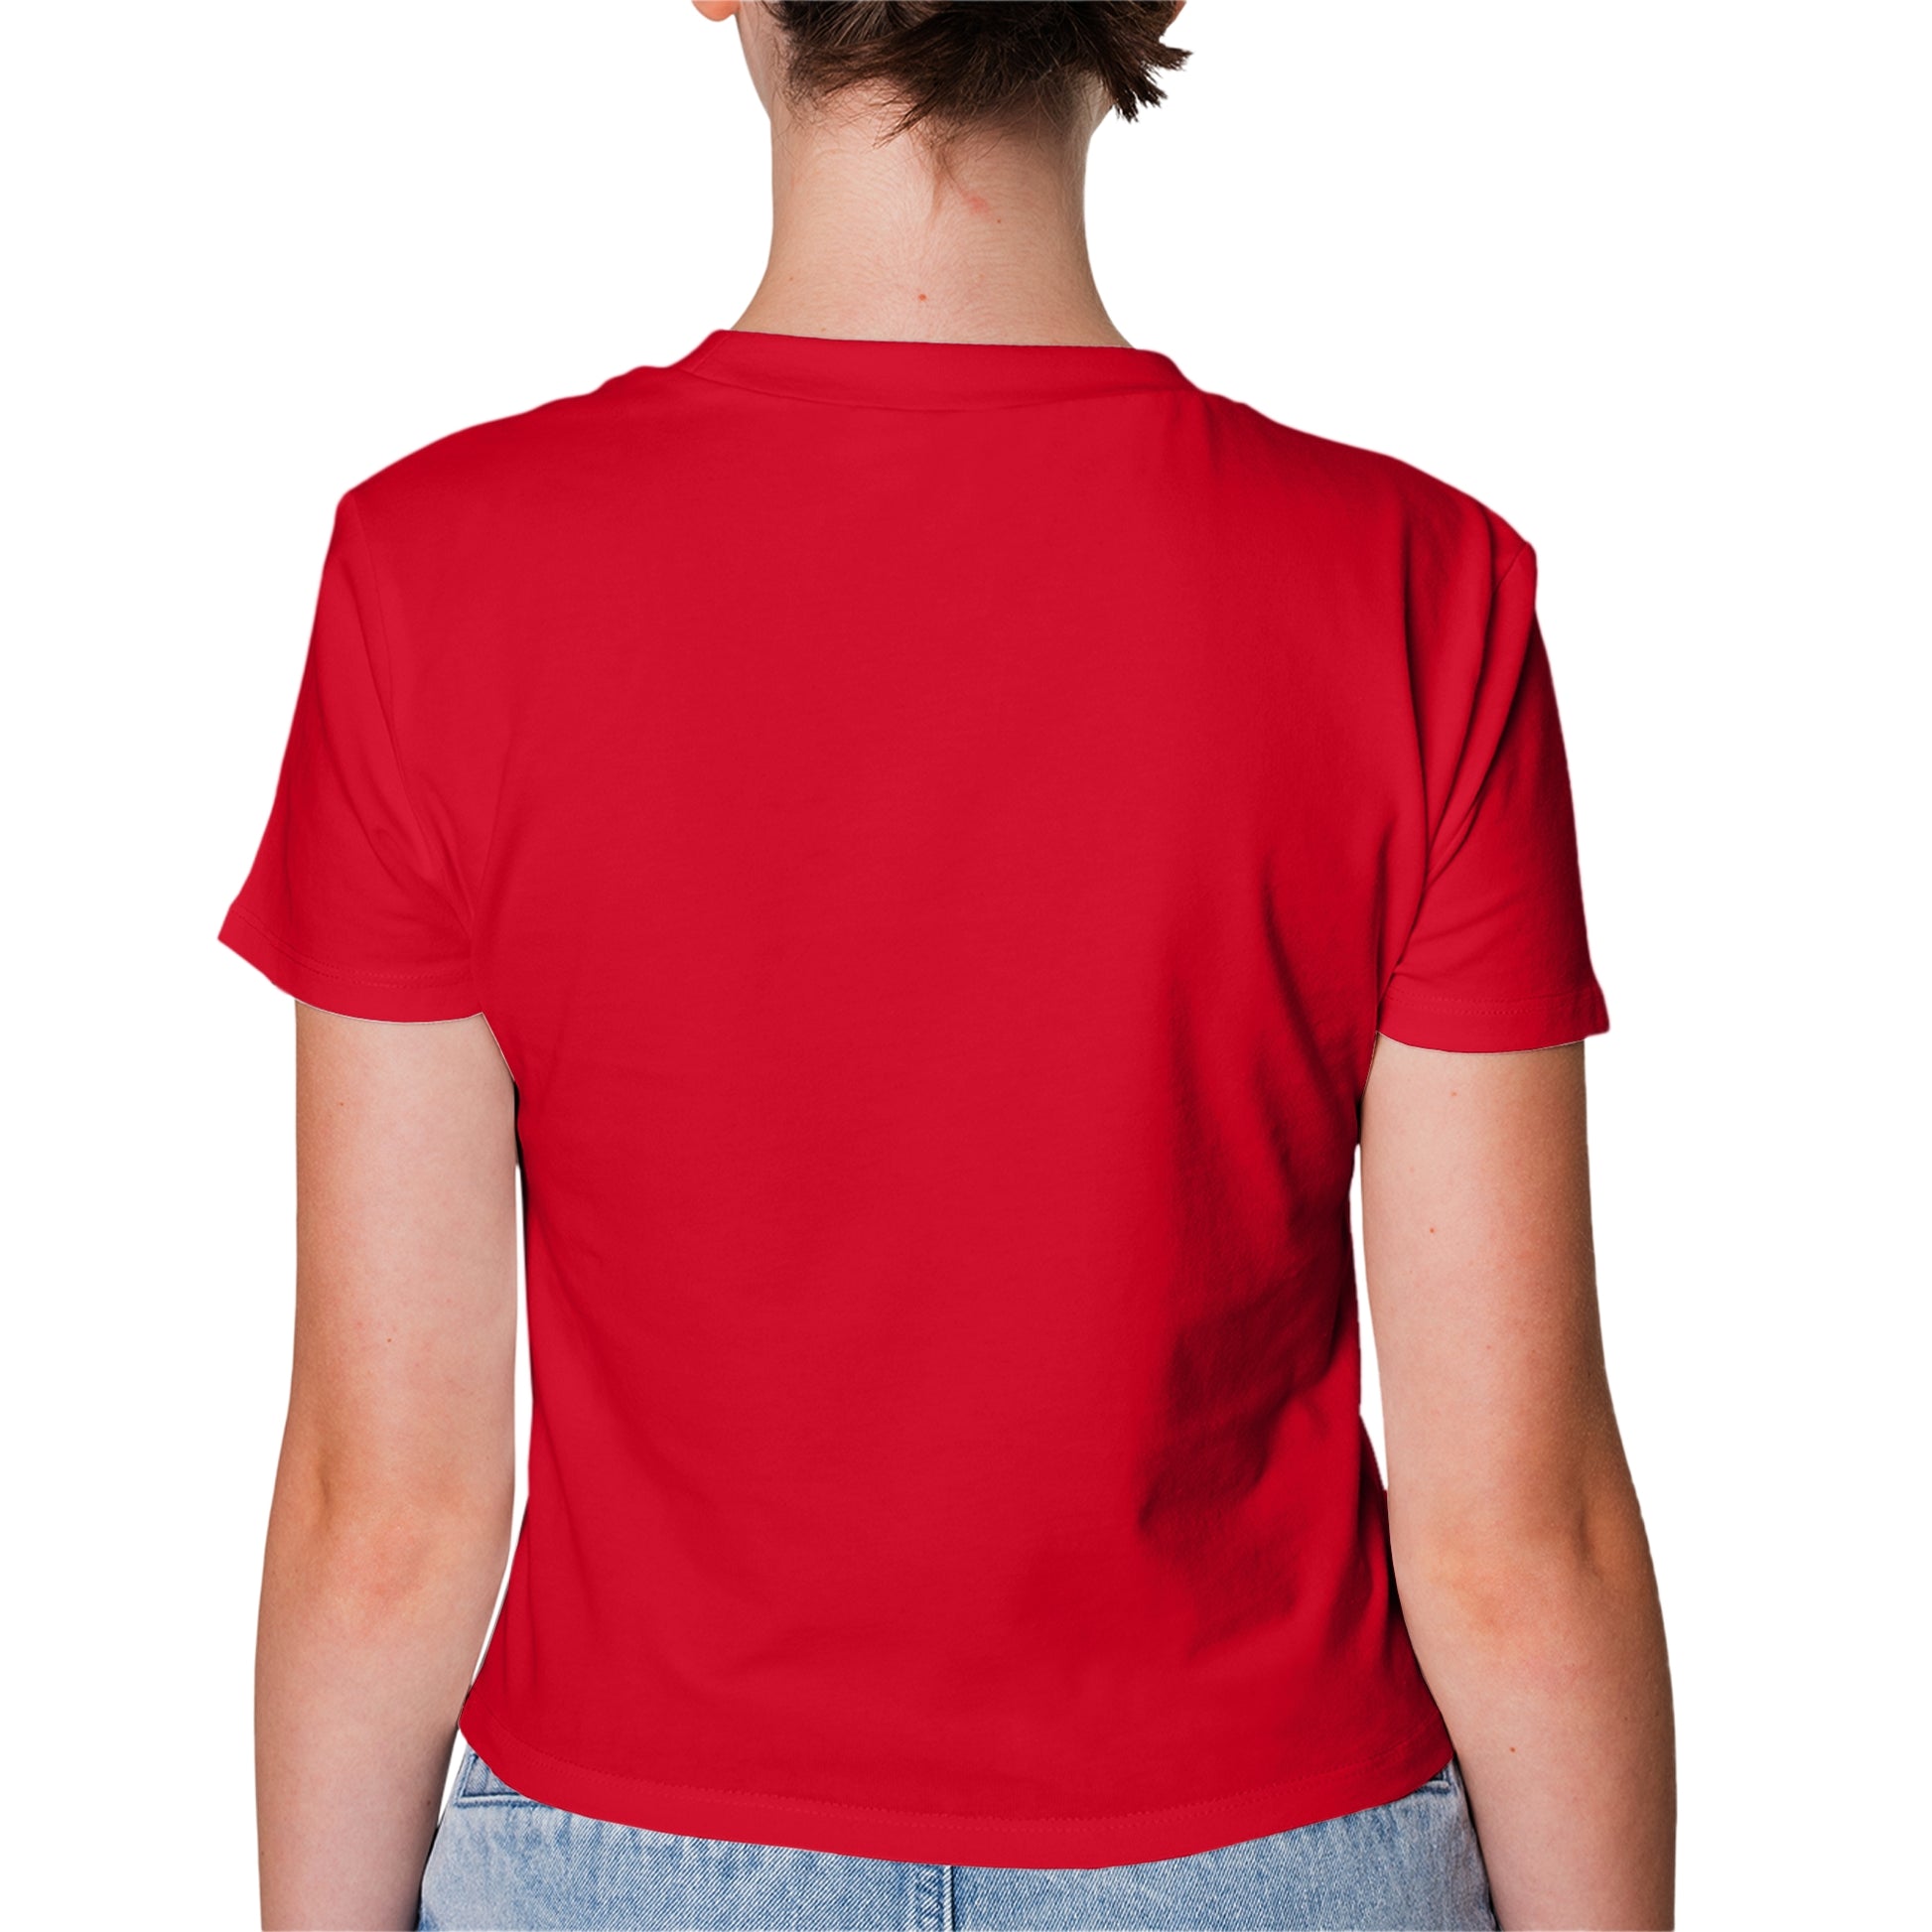 Red T-Shirt For Women - FlyingCart.pk